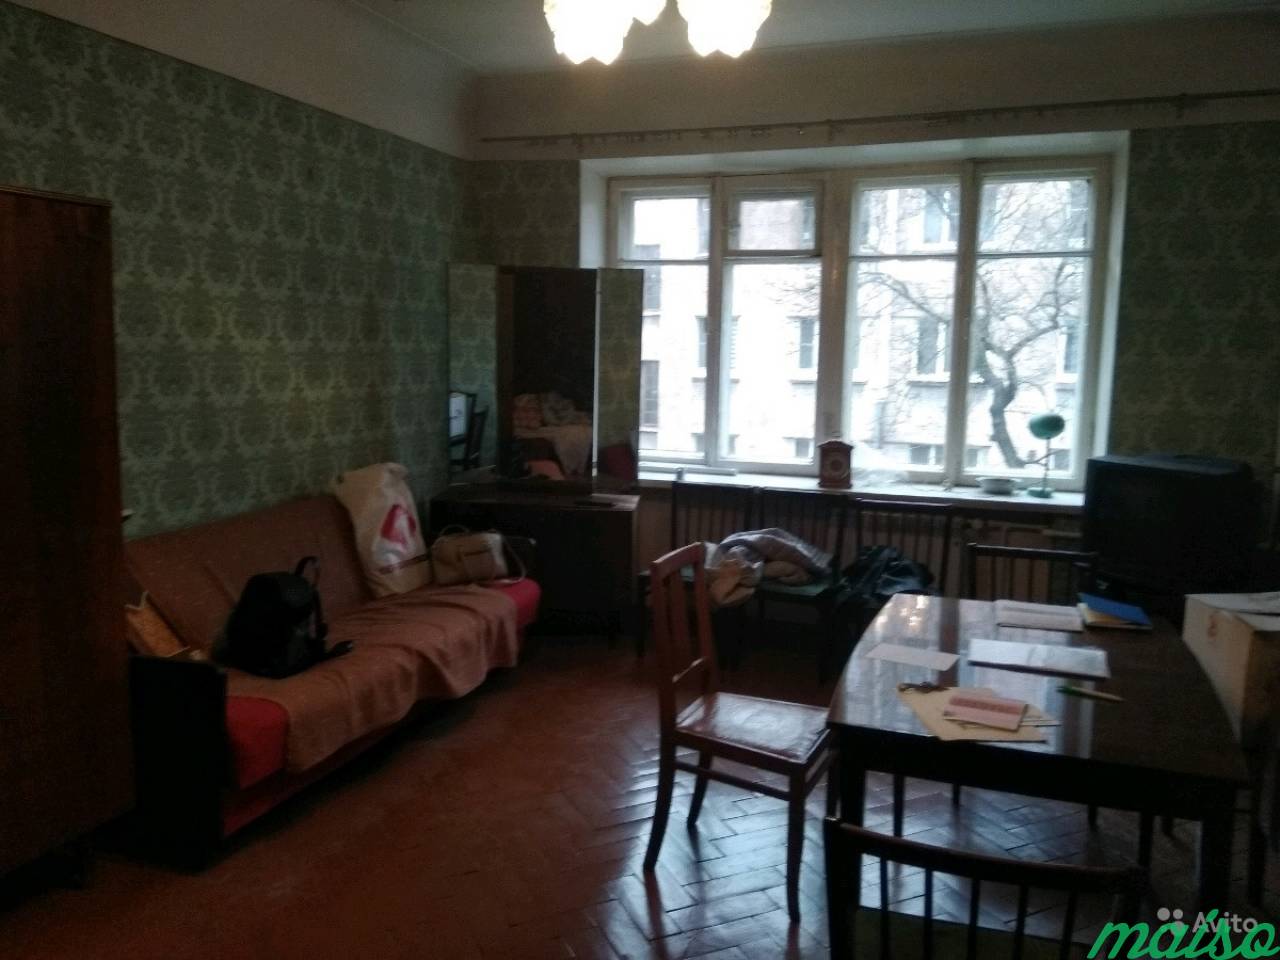 Комната 23 м² в 3-к, 3/5 эт. в Санкт-Петербурге. Фото 2